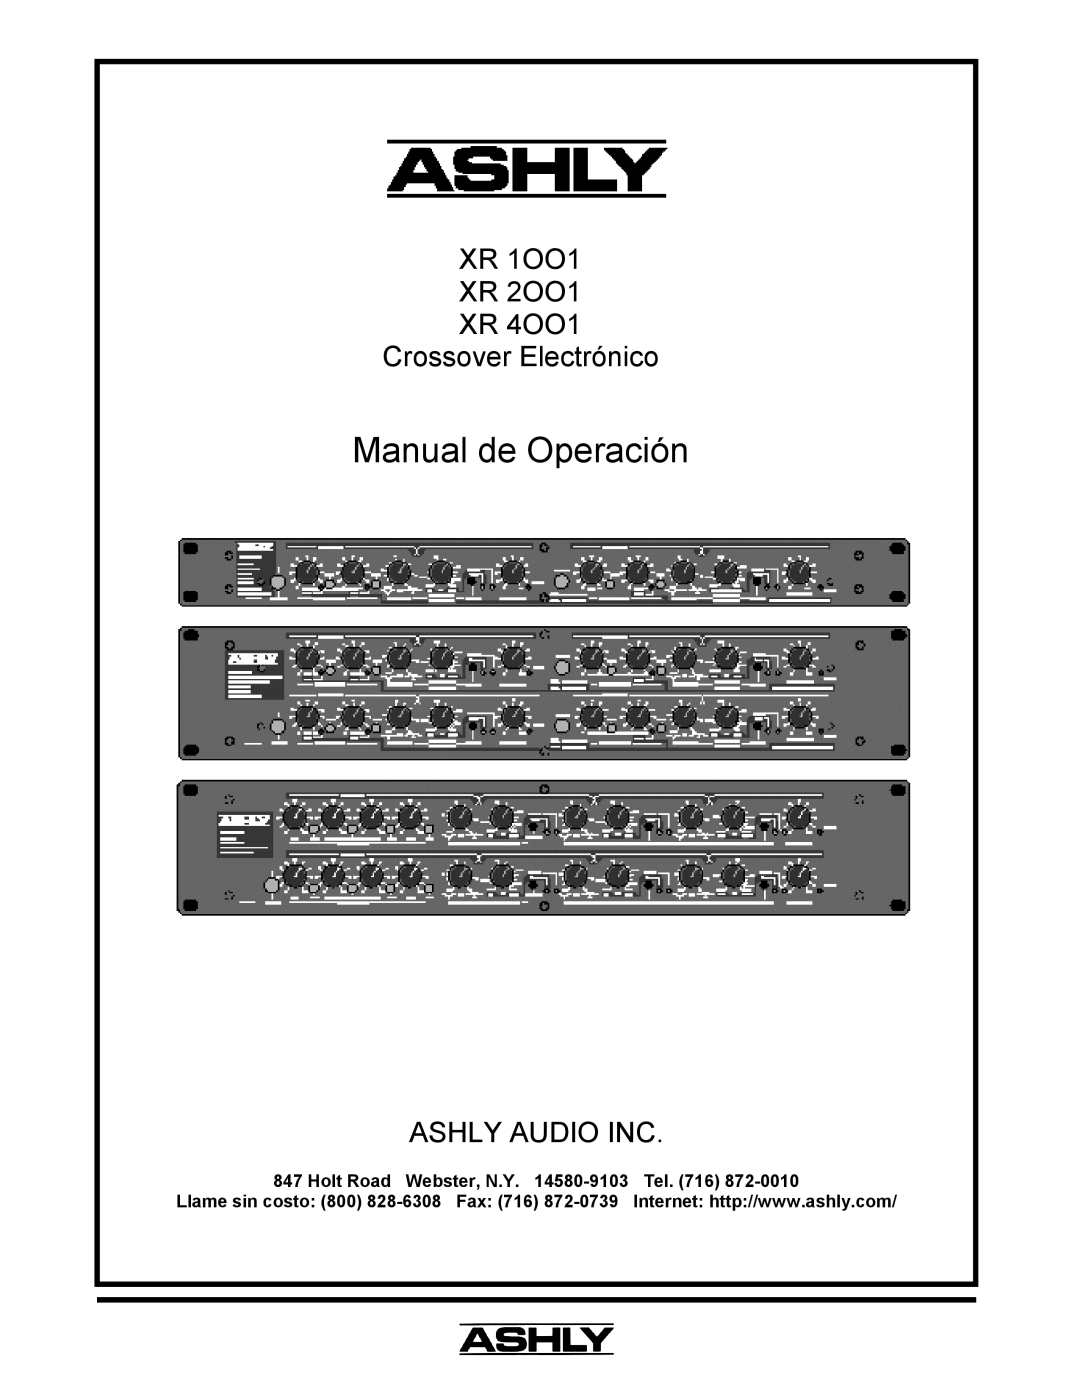 Ashly XR 2OO1, XR 4OO1 manual Manual de Operación, Crossovers Electrónicos XR1001, XR2001, y XR4001, Ashly Audio Inc 